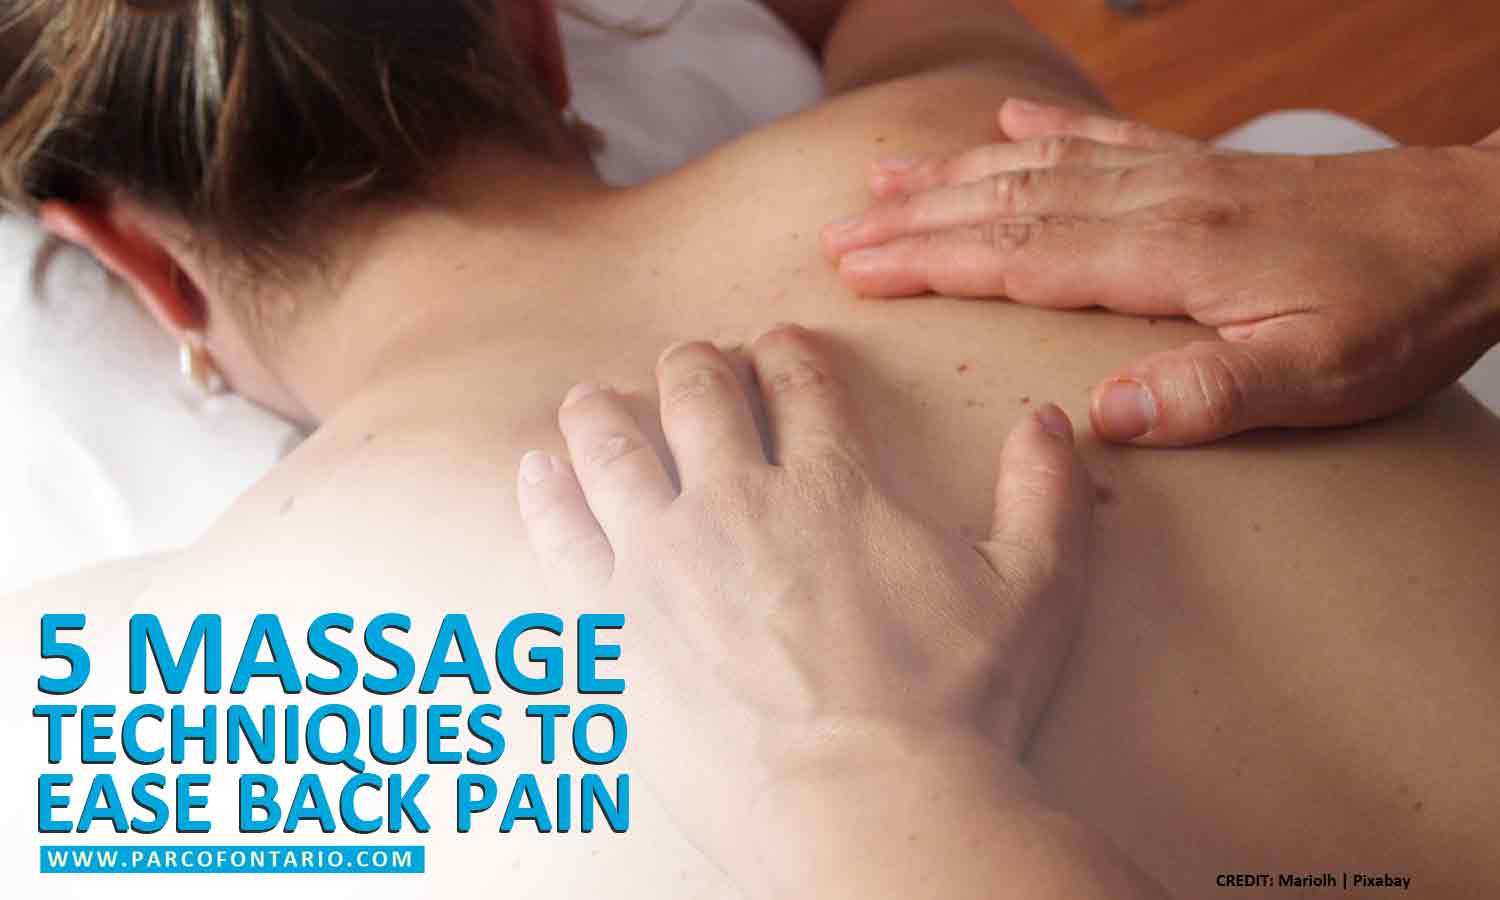 https://www.parcofontario.com/wp-content/uploads/2021/02/5-Massage-Techniques-to-Ease-Back-Pain.jpg